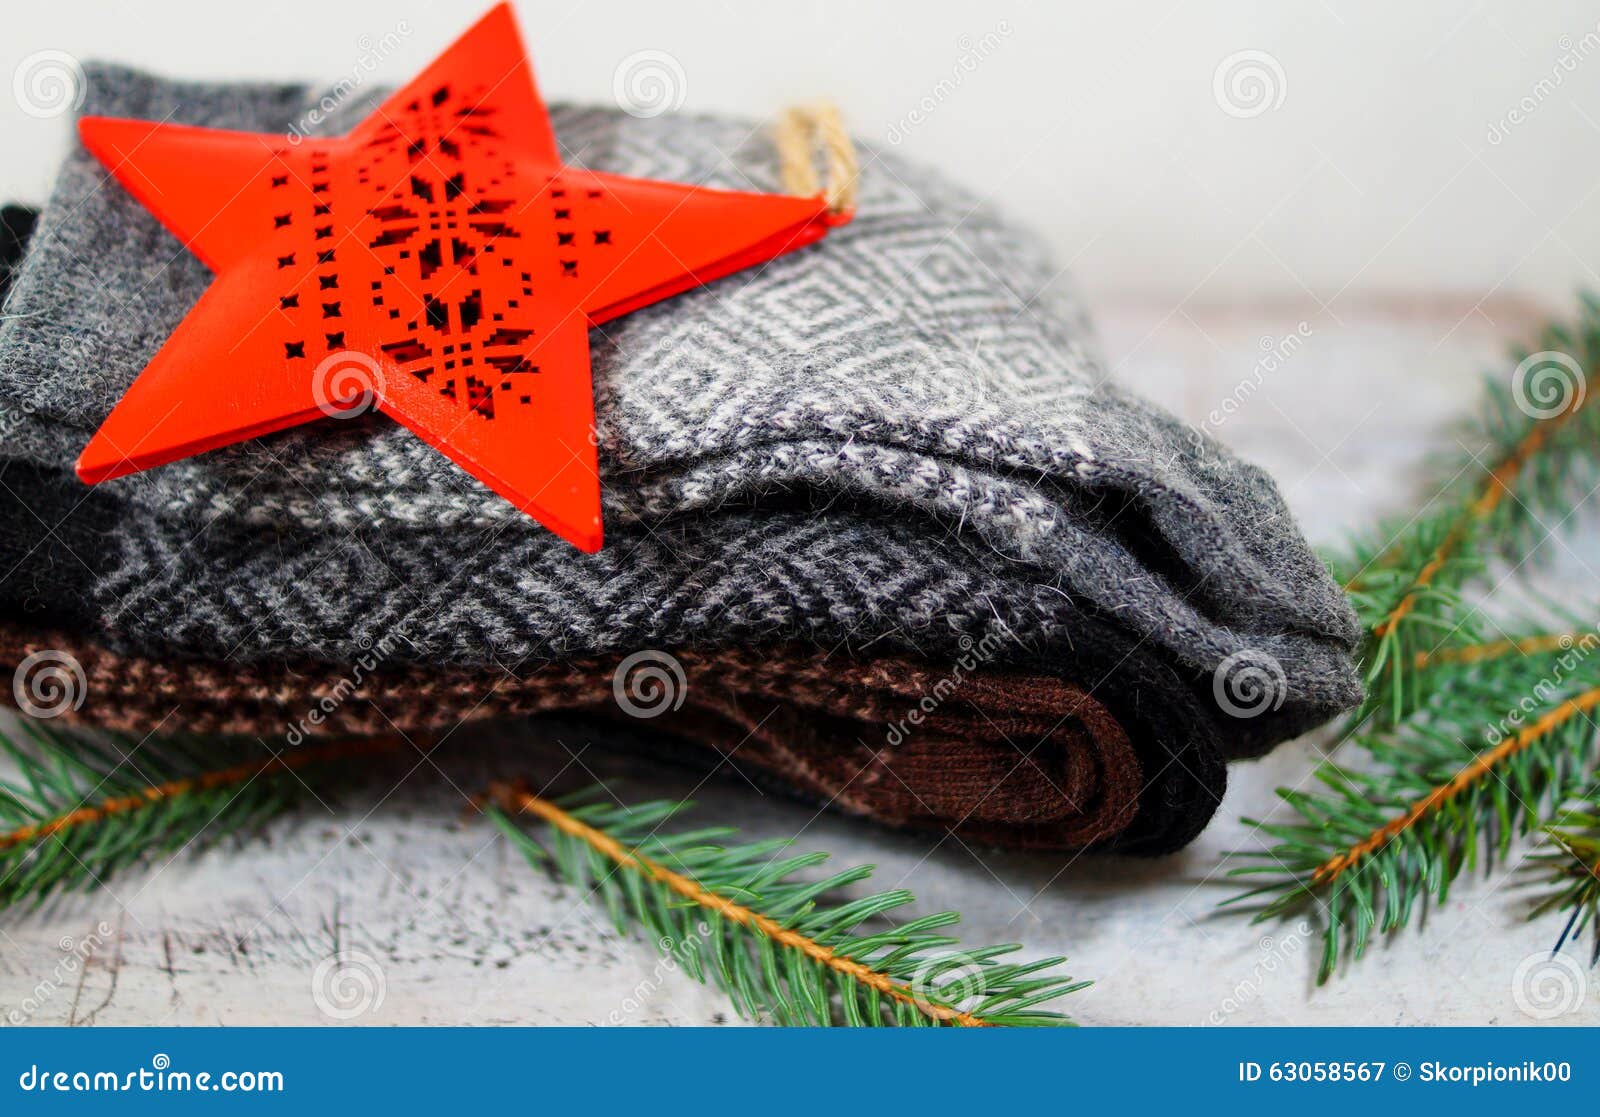 The Popular Christmas Gift for a Man - Wool Socks Stock Image - Image ...